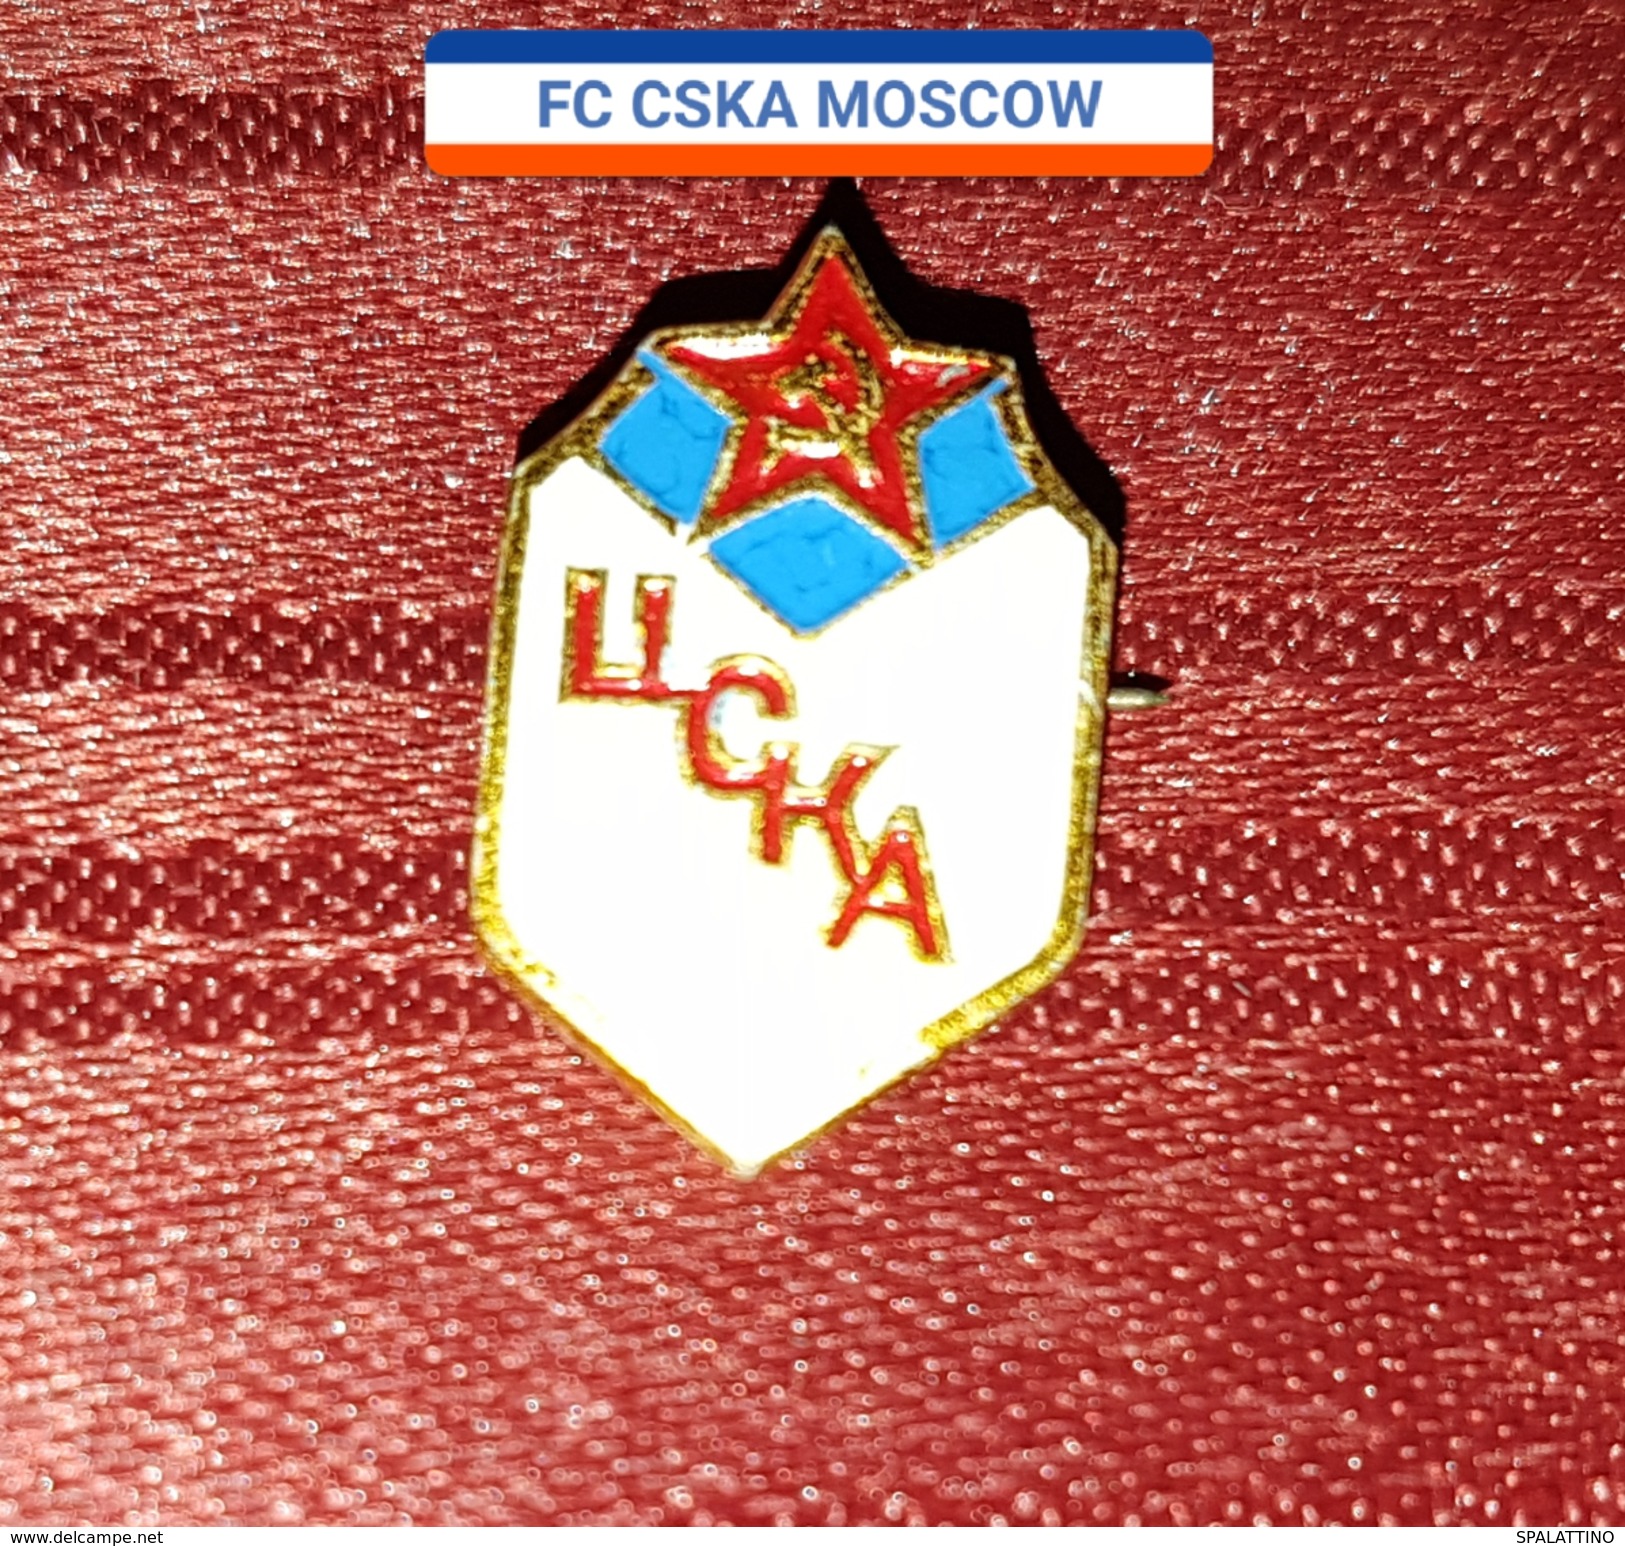 FC CSKA MOSCOW RUSSIA, SOVIET UNION, ORIGINAL OLD VINTAGE PIN BADGE FOOTBALL SOCCER - Fussball